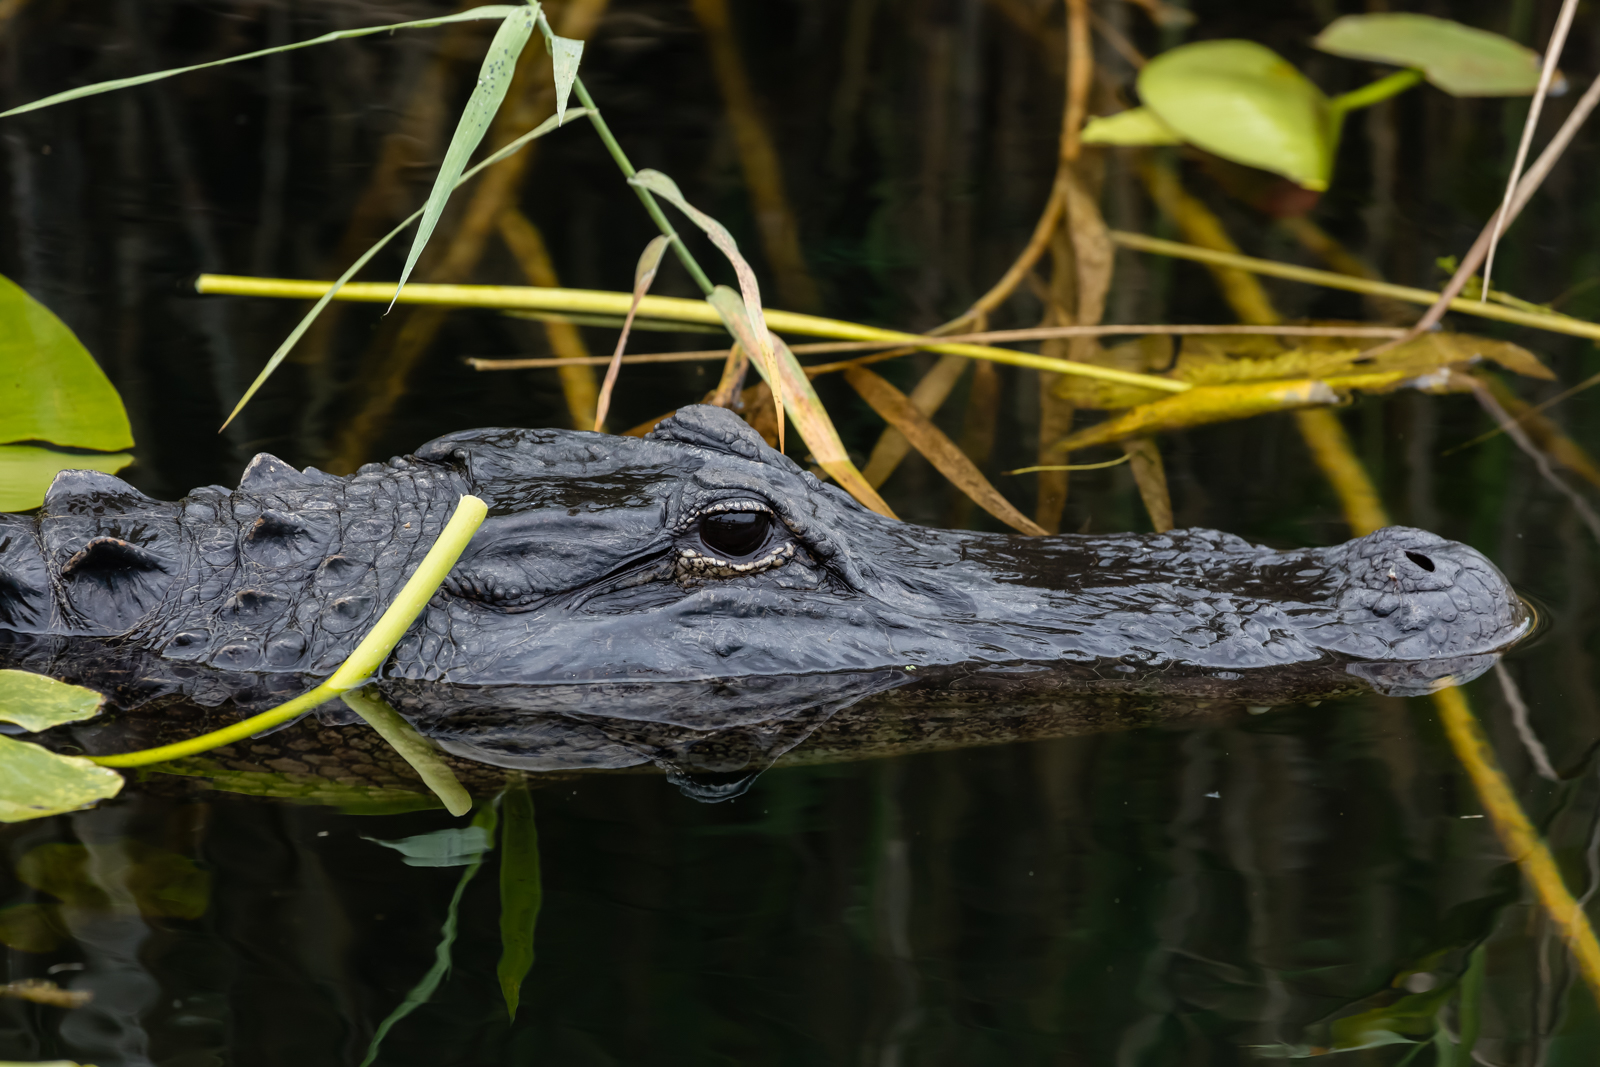 Gator in the weeds, Everglades National Park, Florida